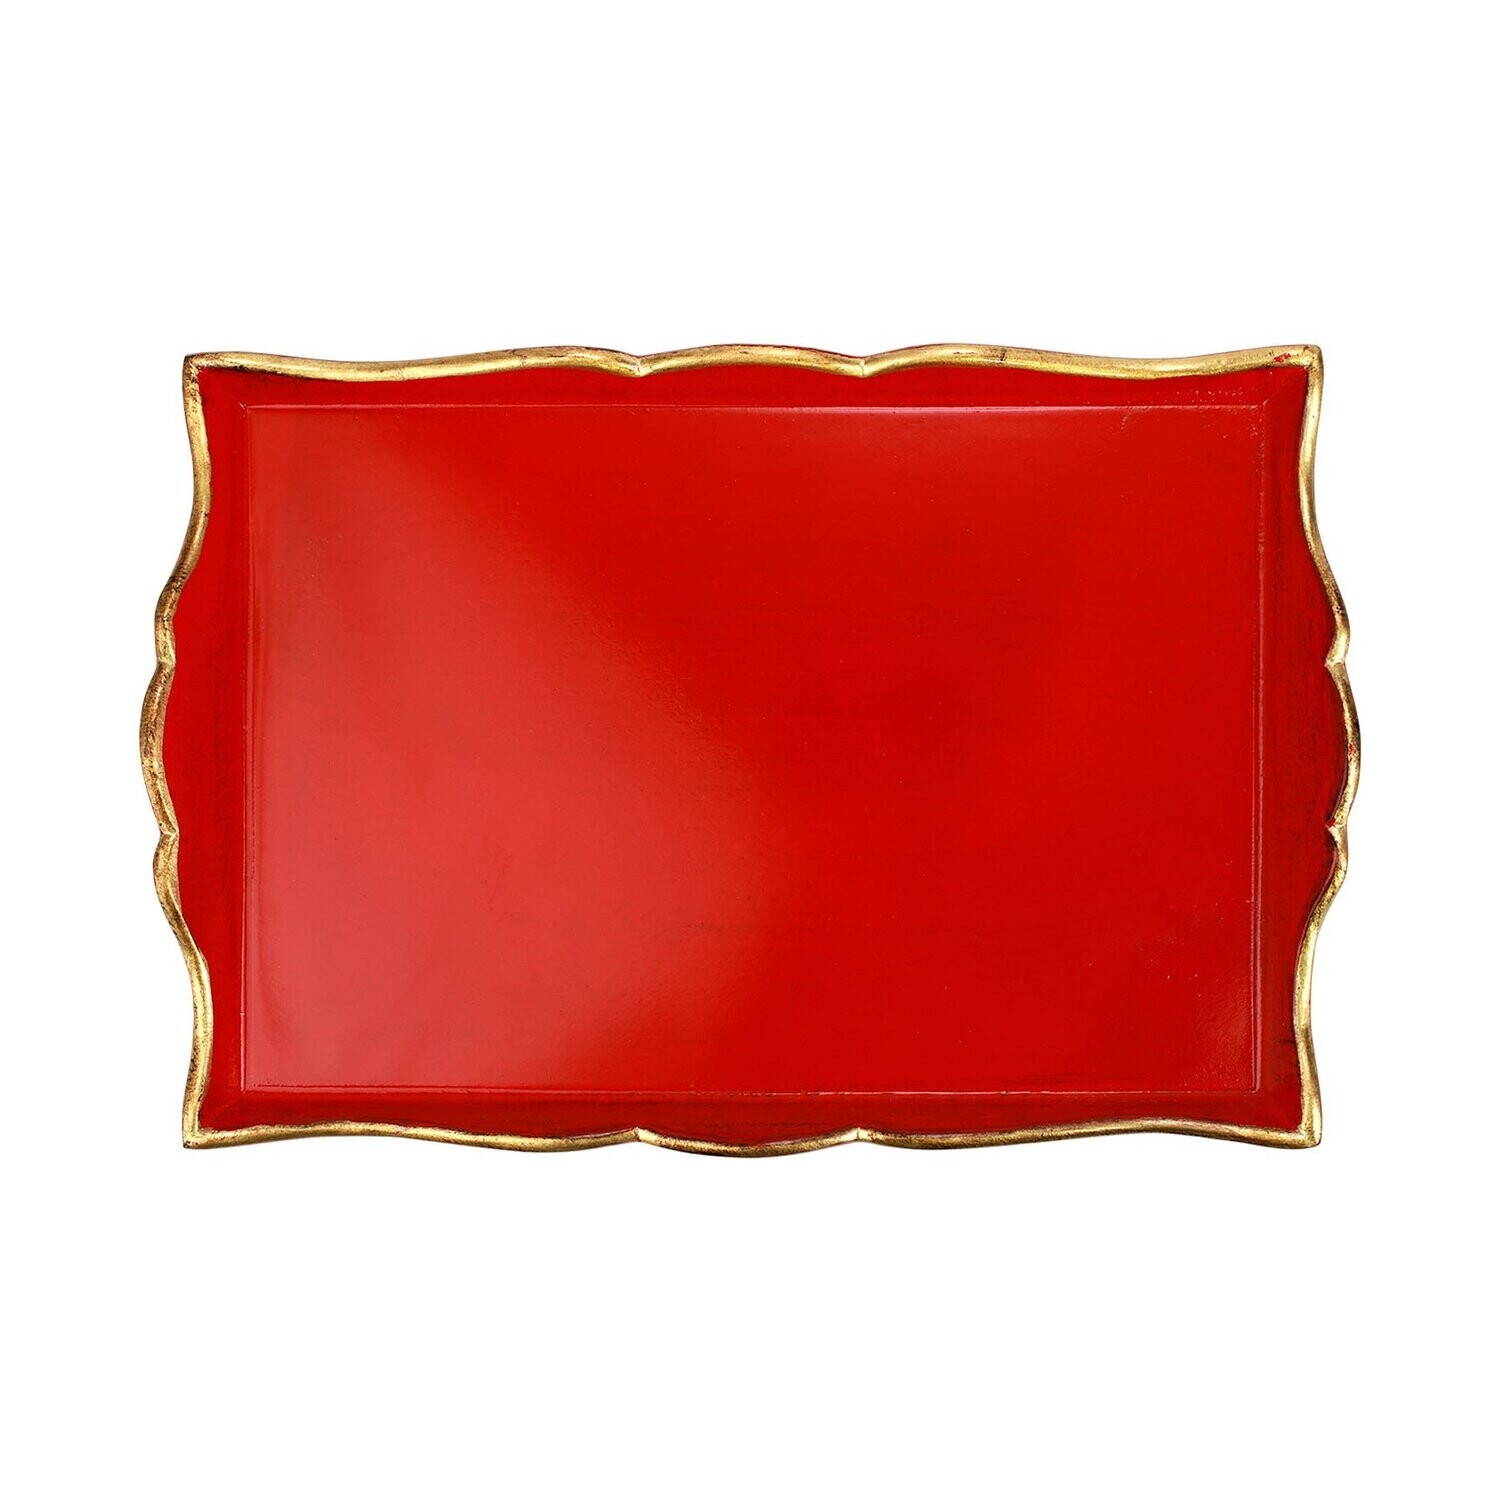 VIETRI Florentine red medium rectagular Tray 